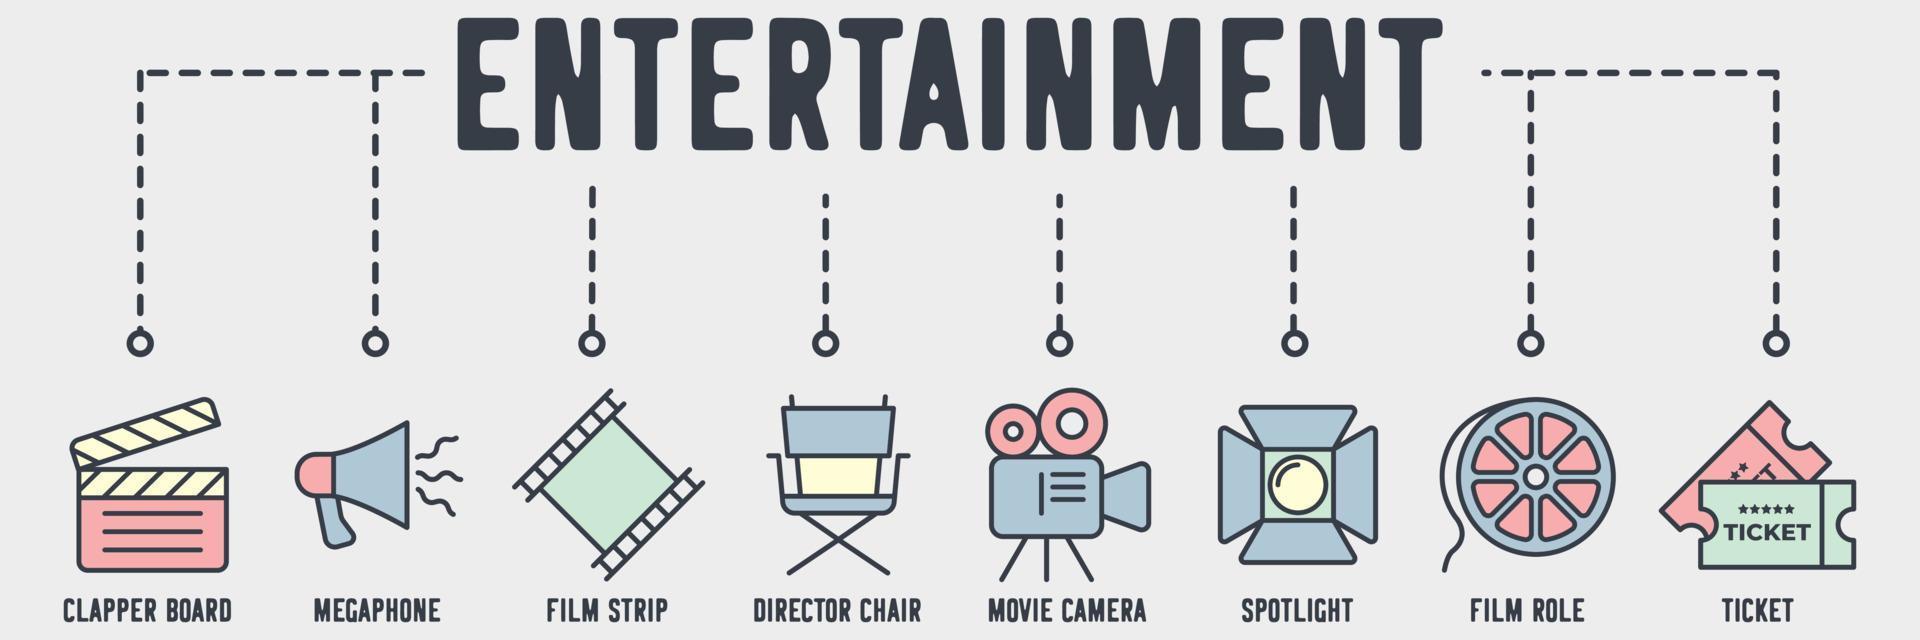 icono de web de banner de entretenimiento de cine. tablero de claqueta, megáfono, tira de película, silla de director, cámara de cine, foco, papel de película, concepto de ilustración de vector de boleto.